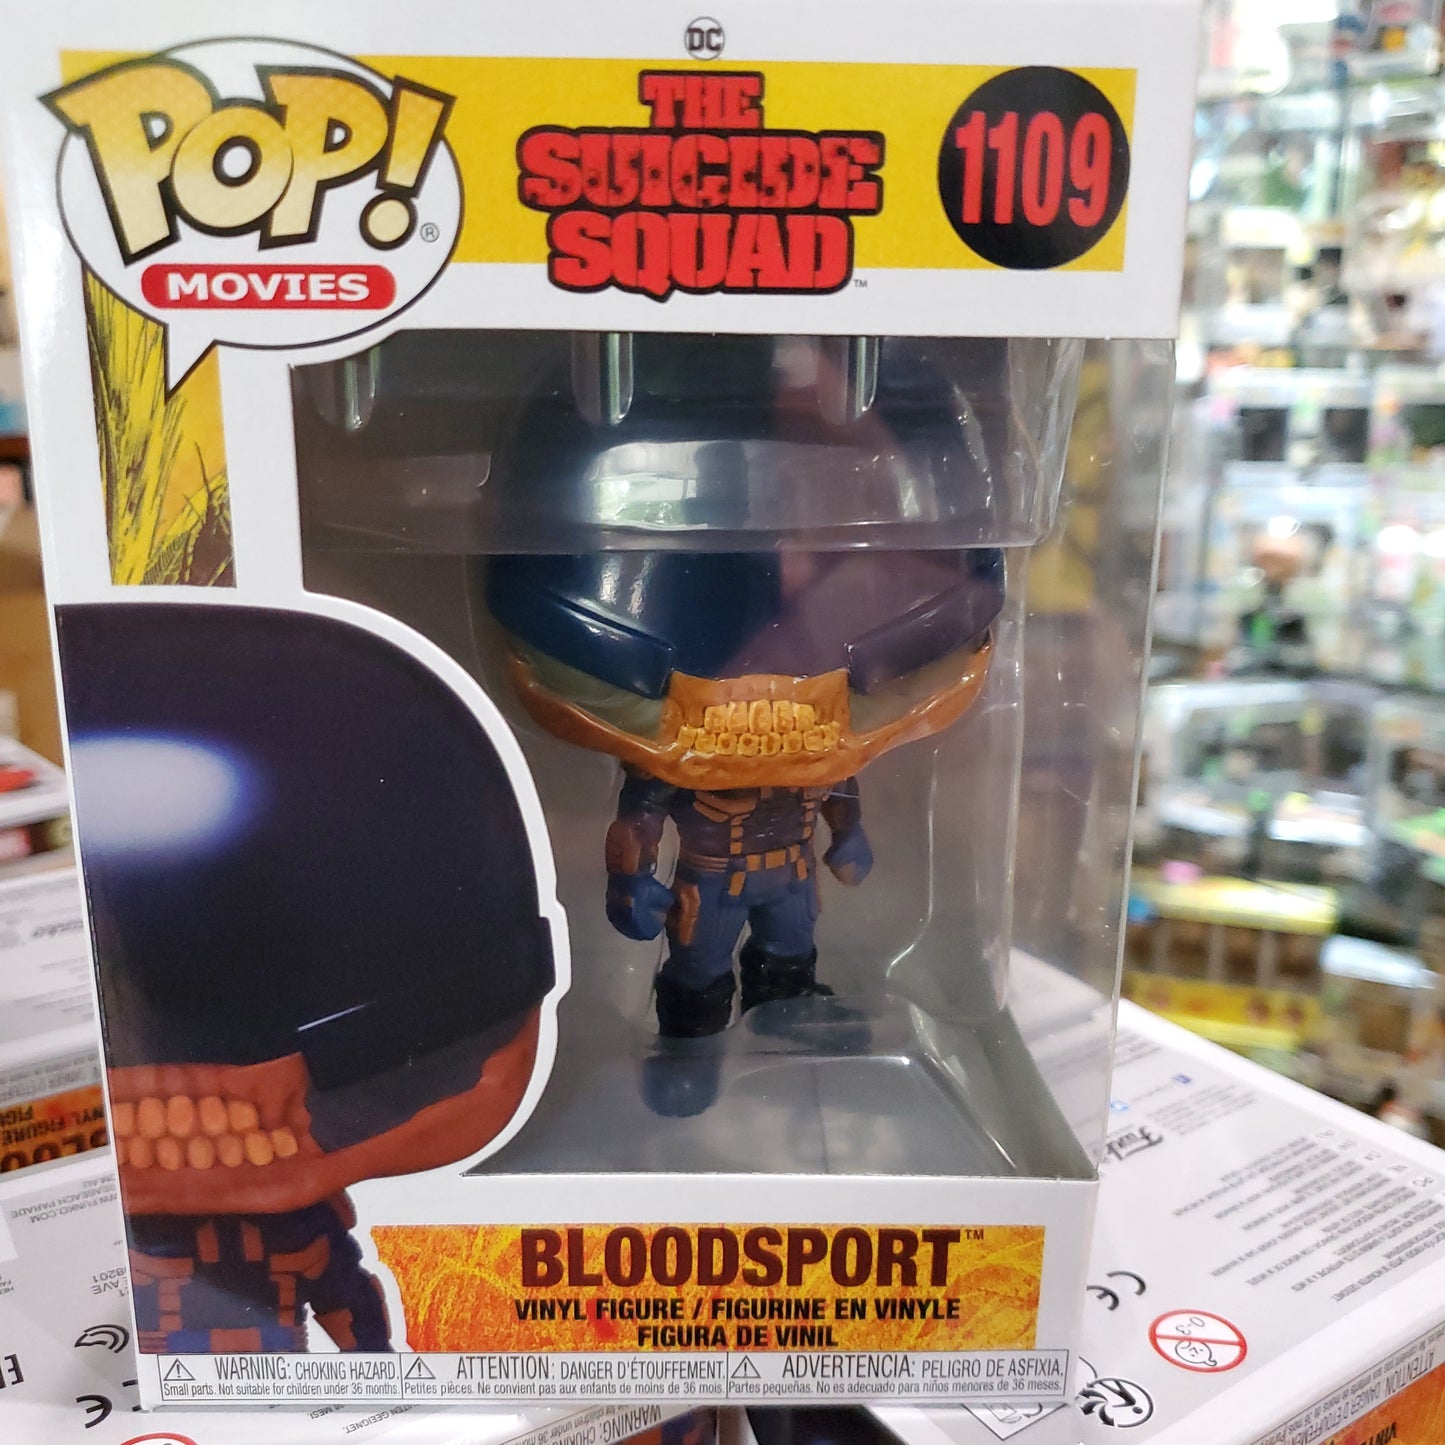 The Suicide Squad Bloodsport Funko Pop! Vinyl figure